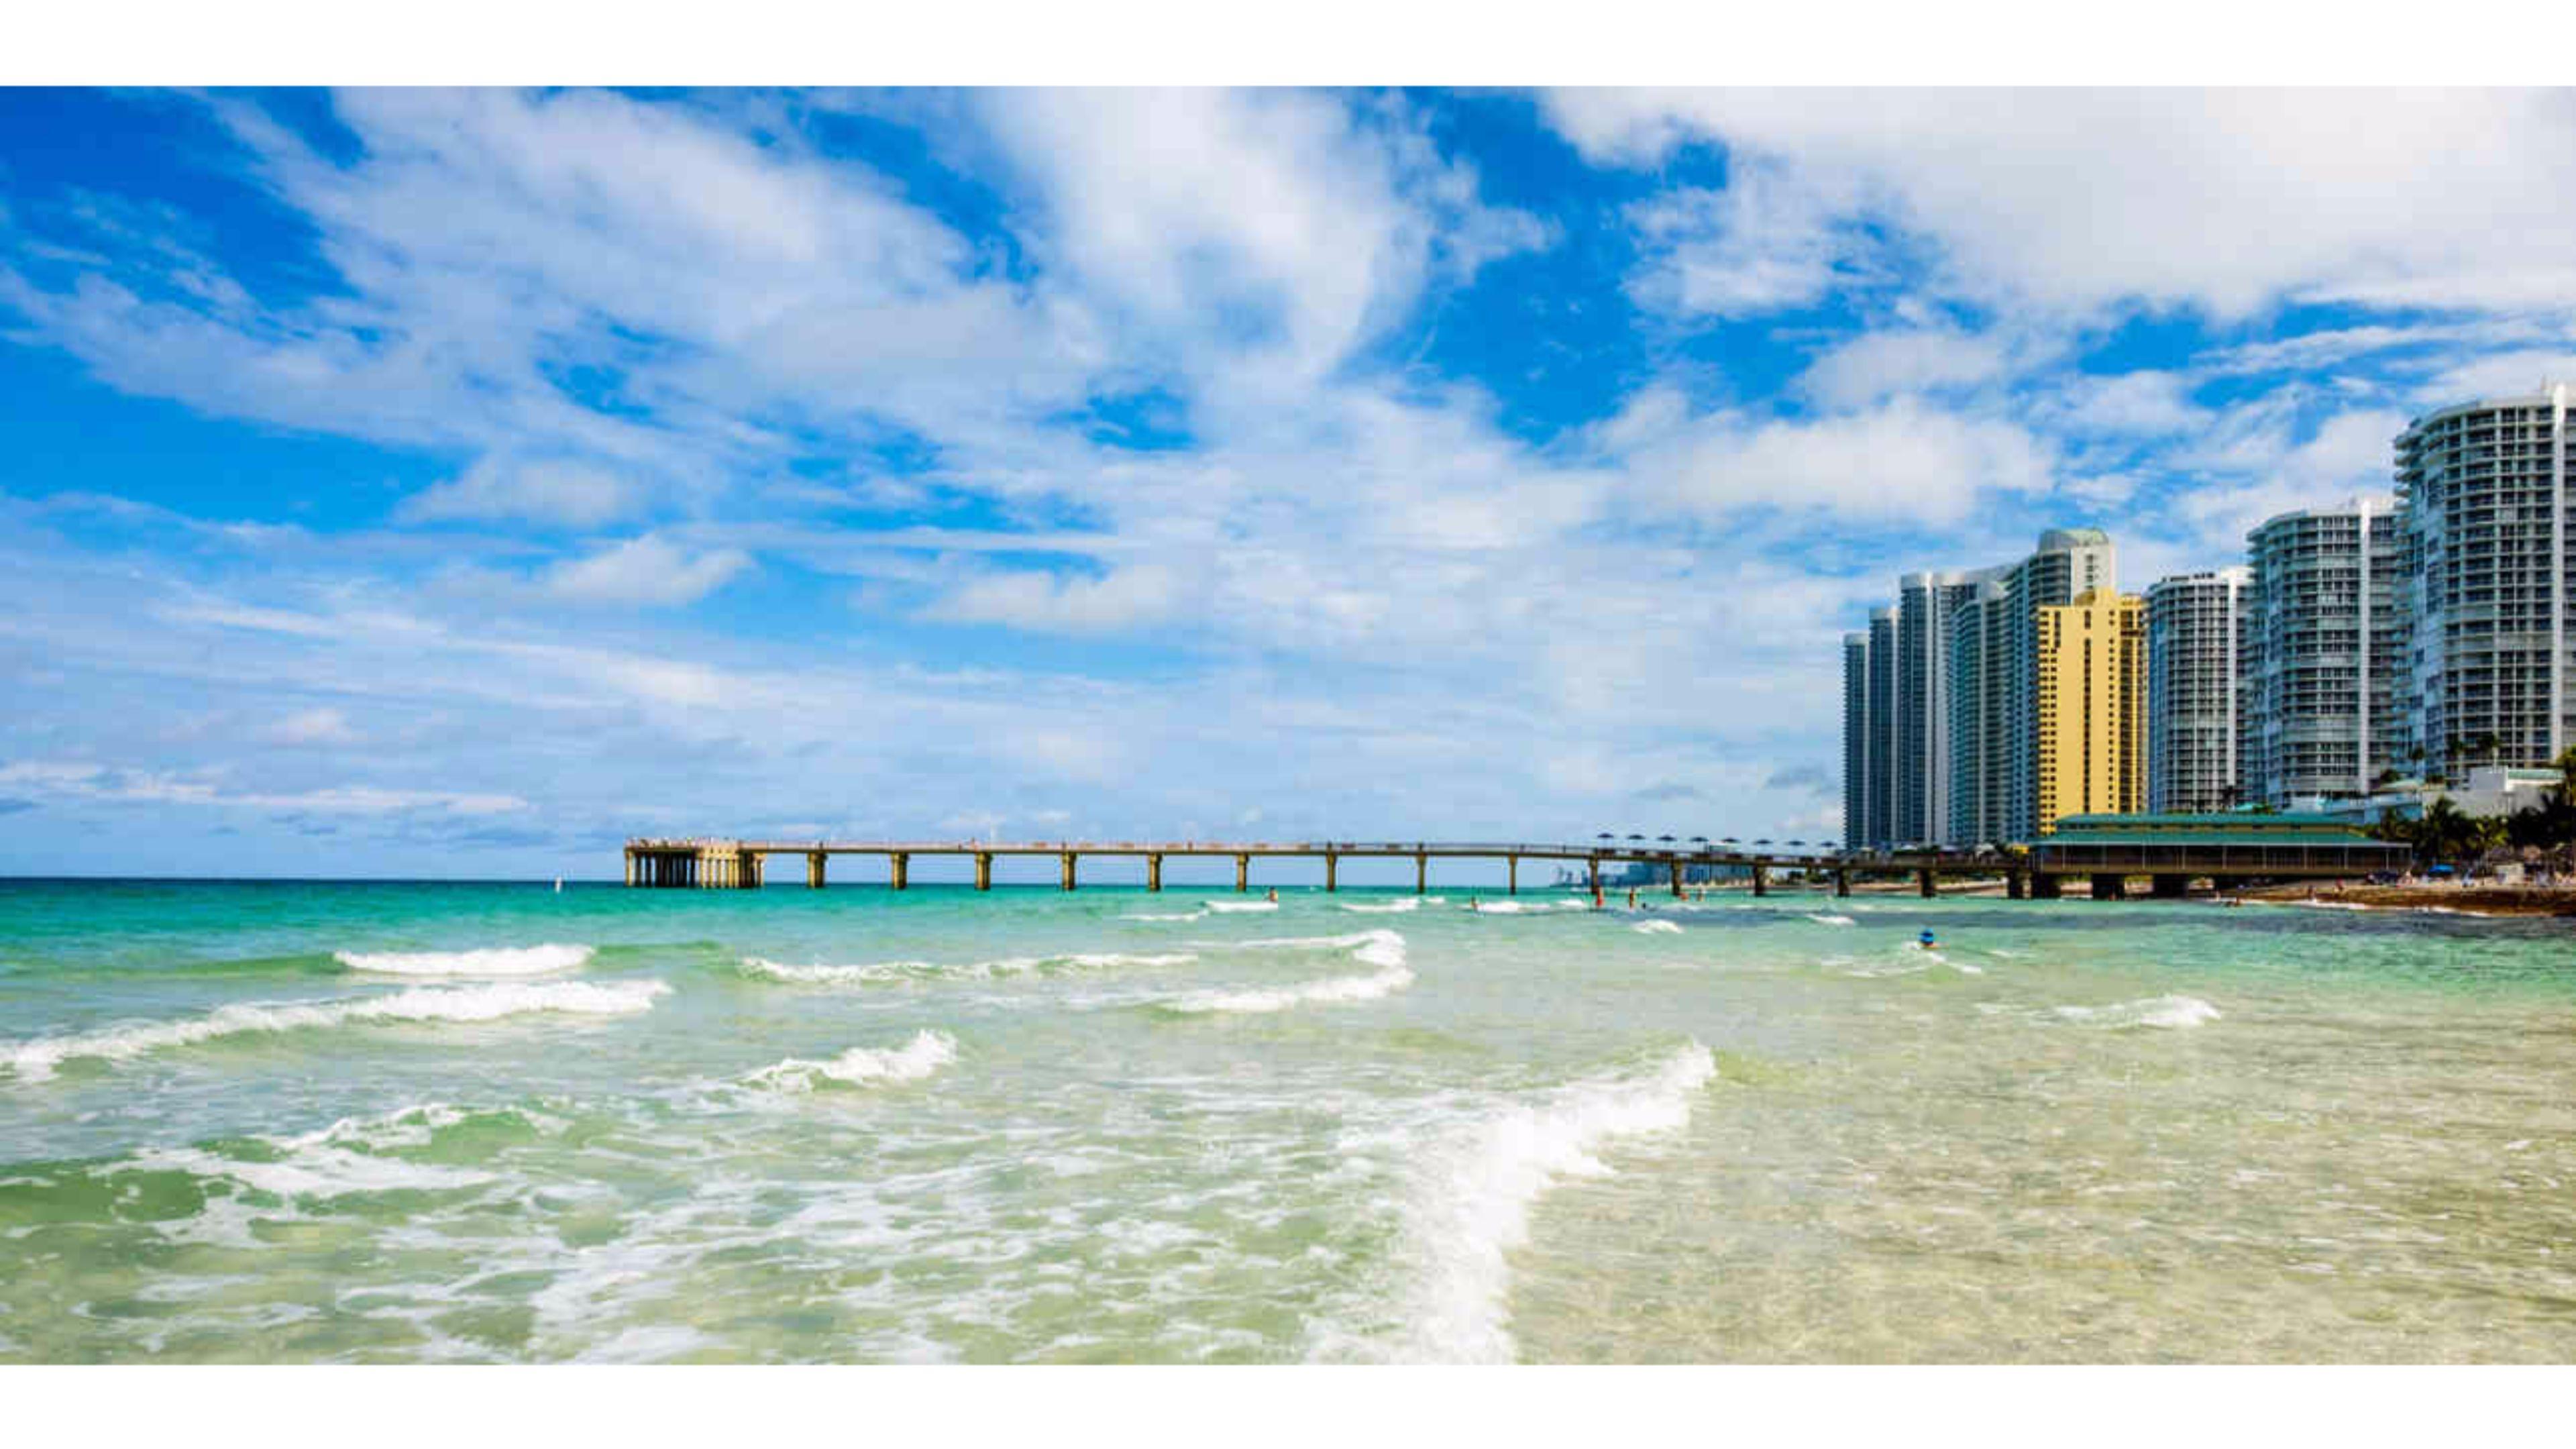 New South Beach 2016 Miami Florida 4K Wallpaper. Free 4K Wallpaper